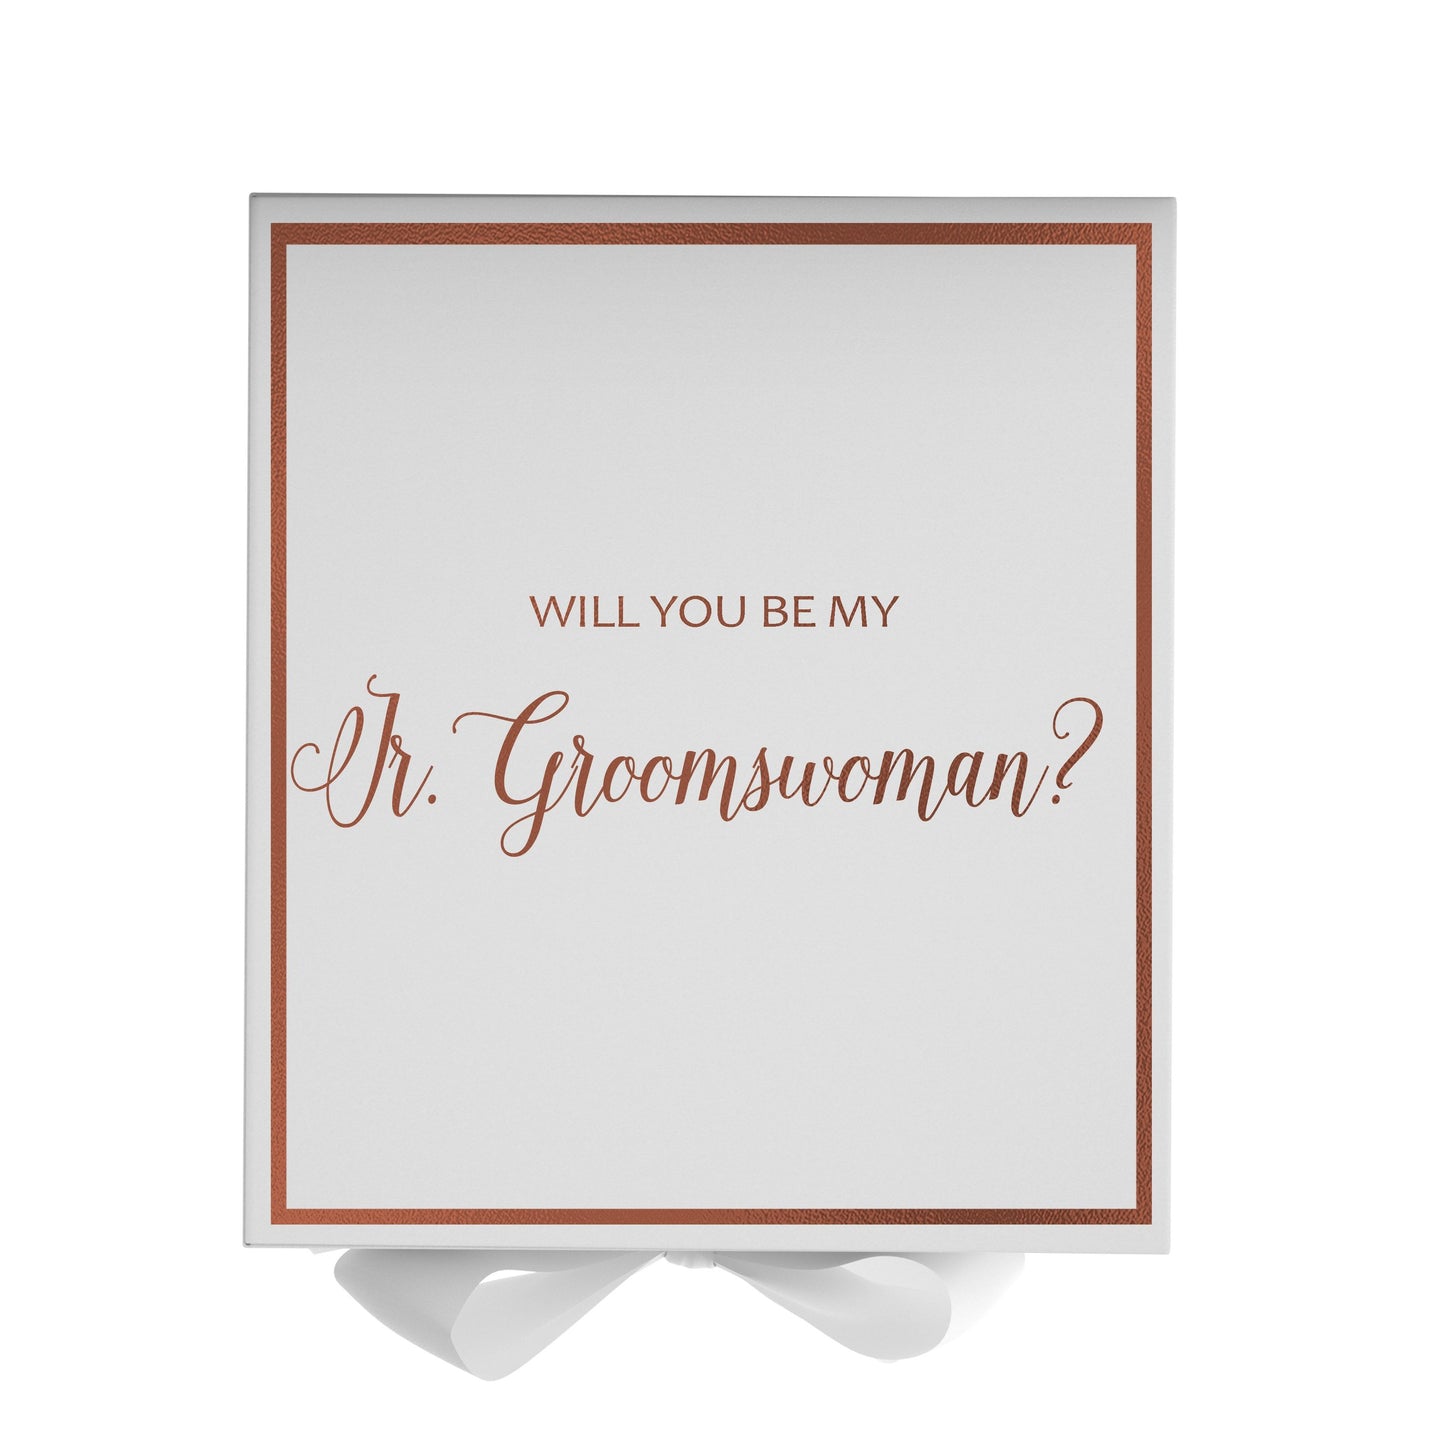 Will You Be My Jr Groomswoman? Proposal Box White -  Border